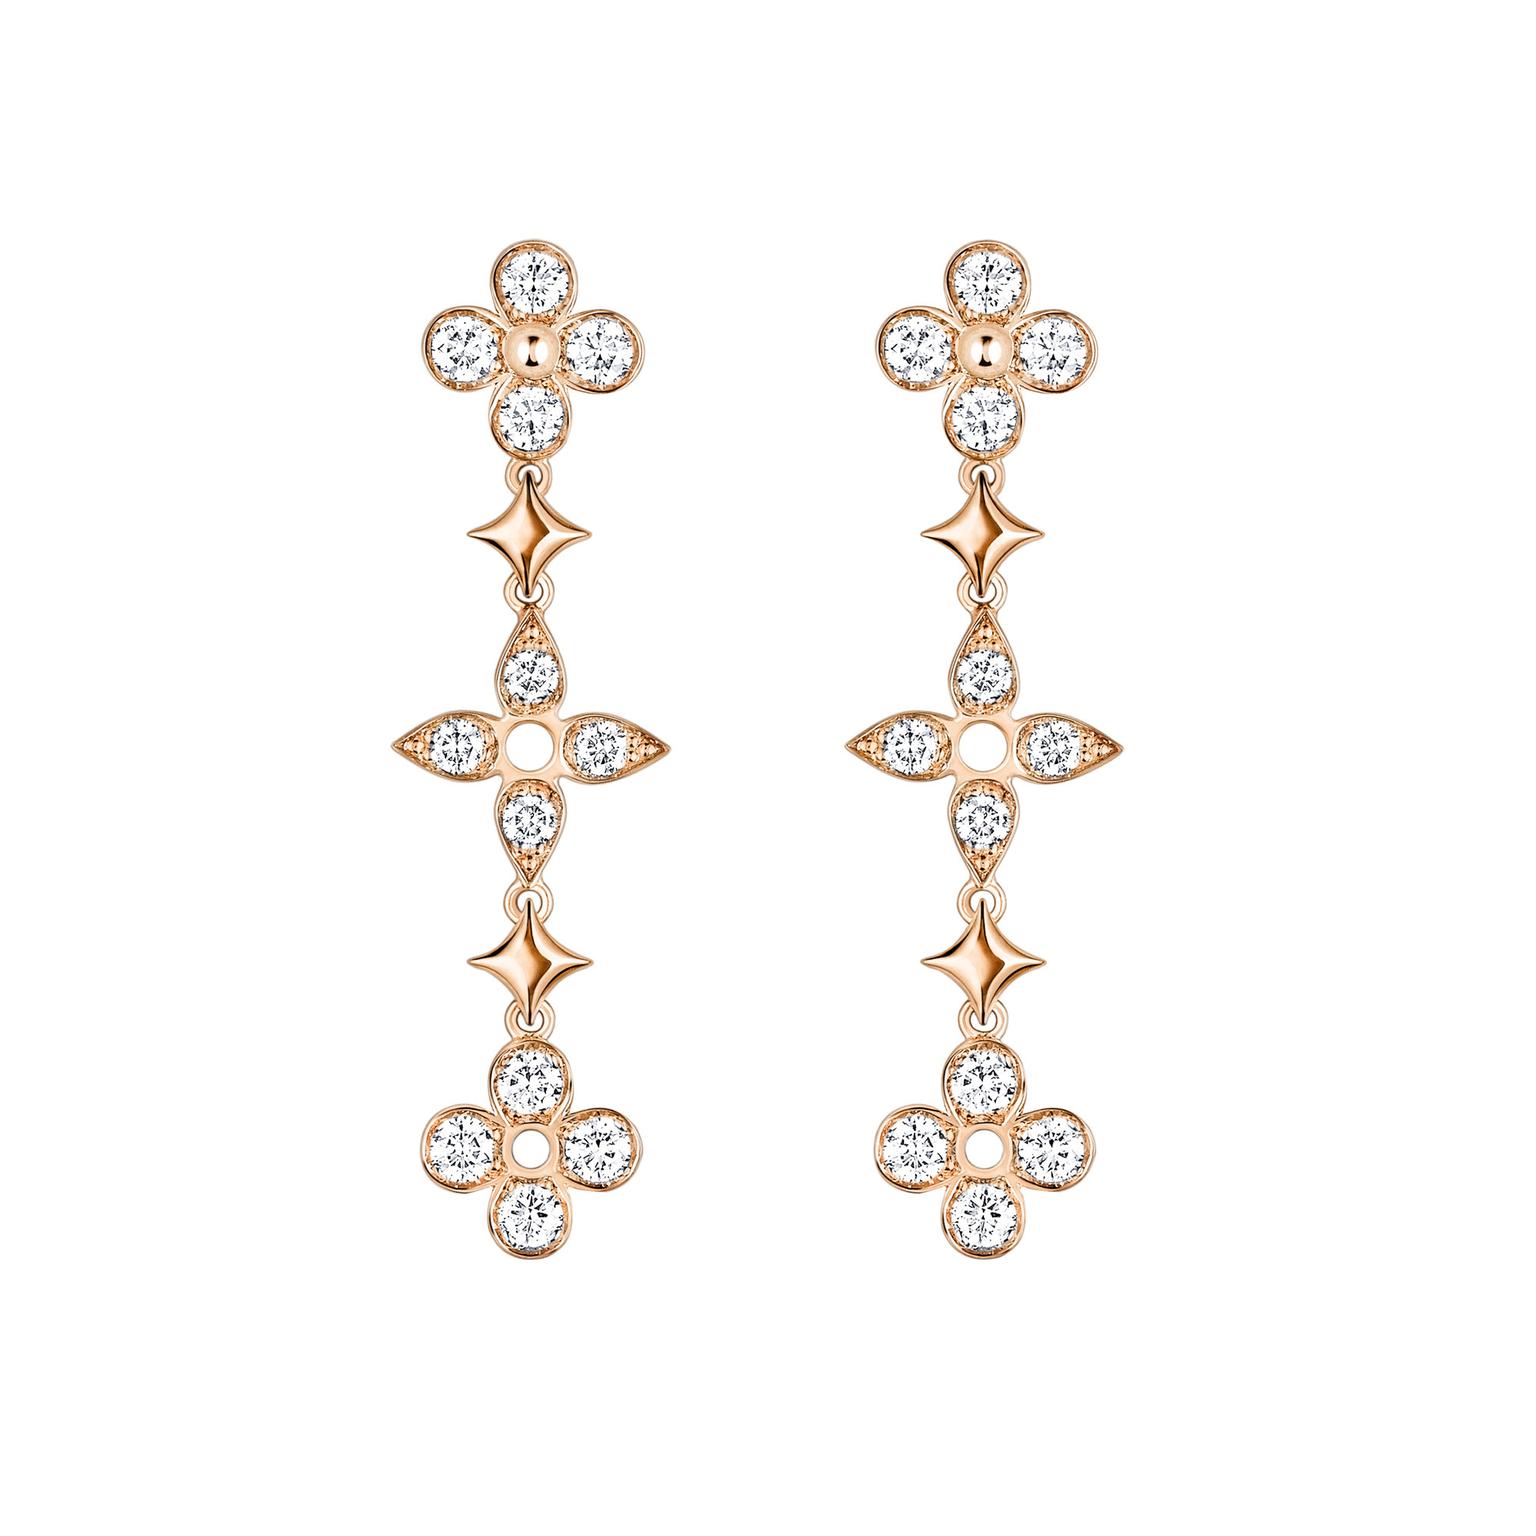 Louis Vuitton earrings boucle d'reil sweet monogram